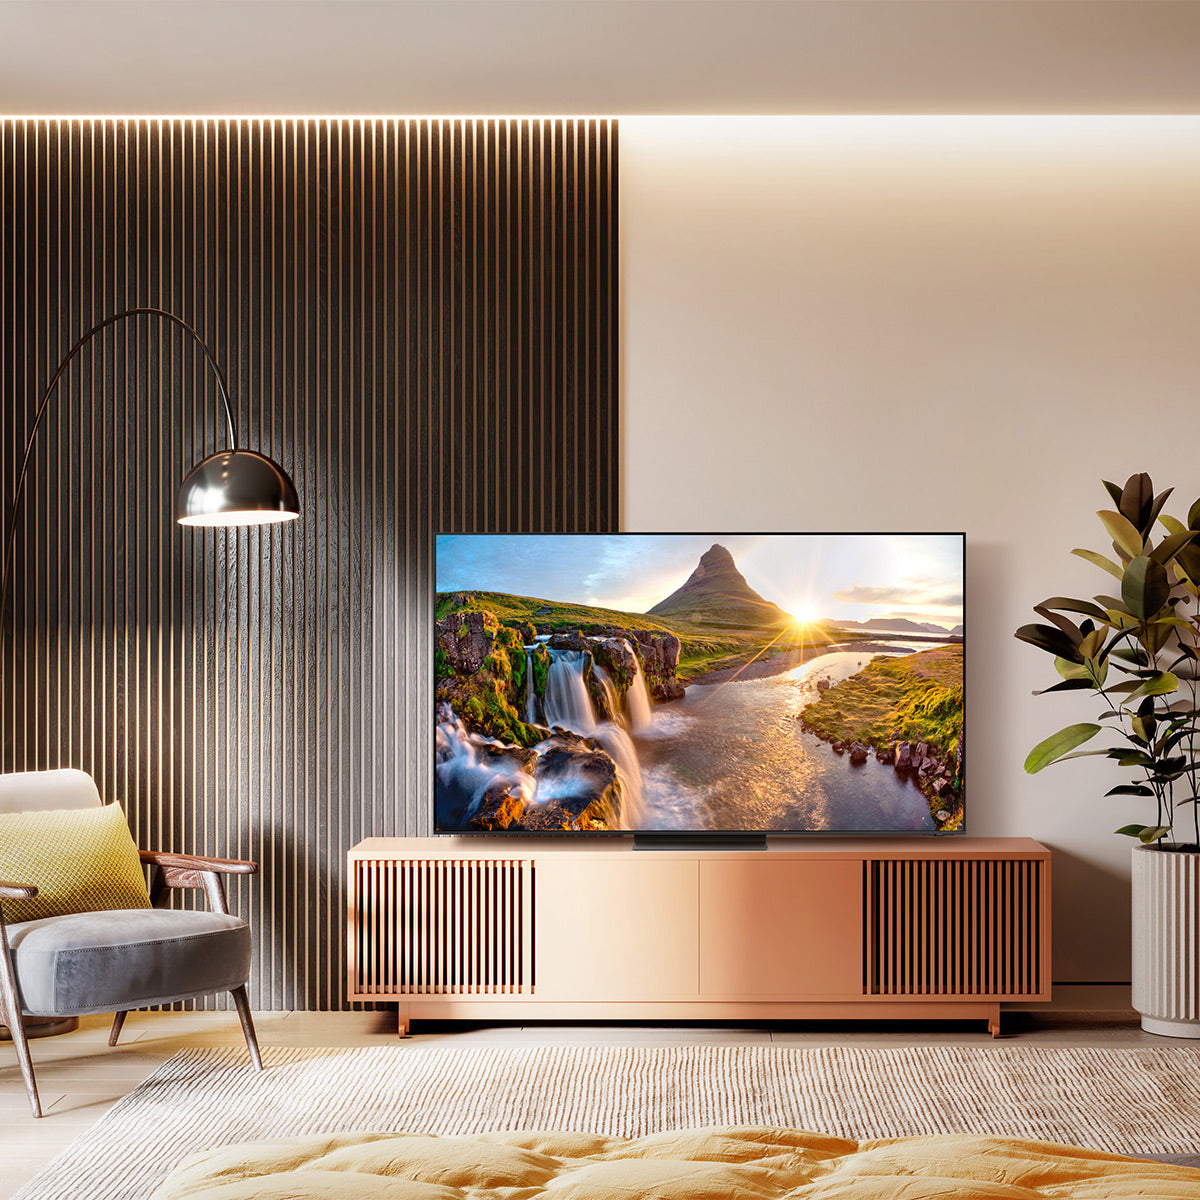 Smart TV Samsung 4k Neo QLED 65 - Style Store